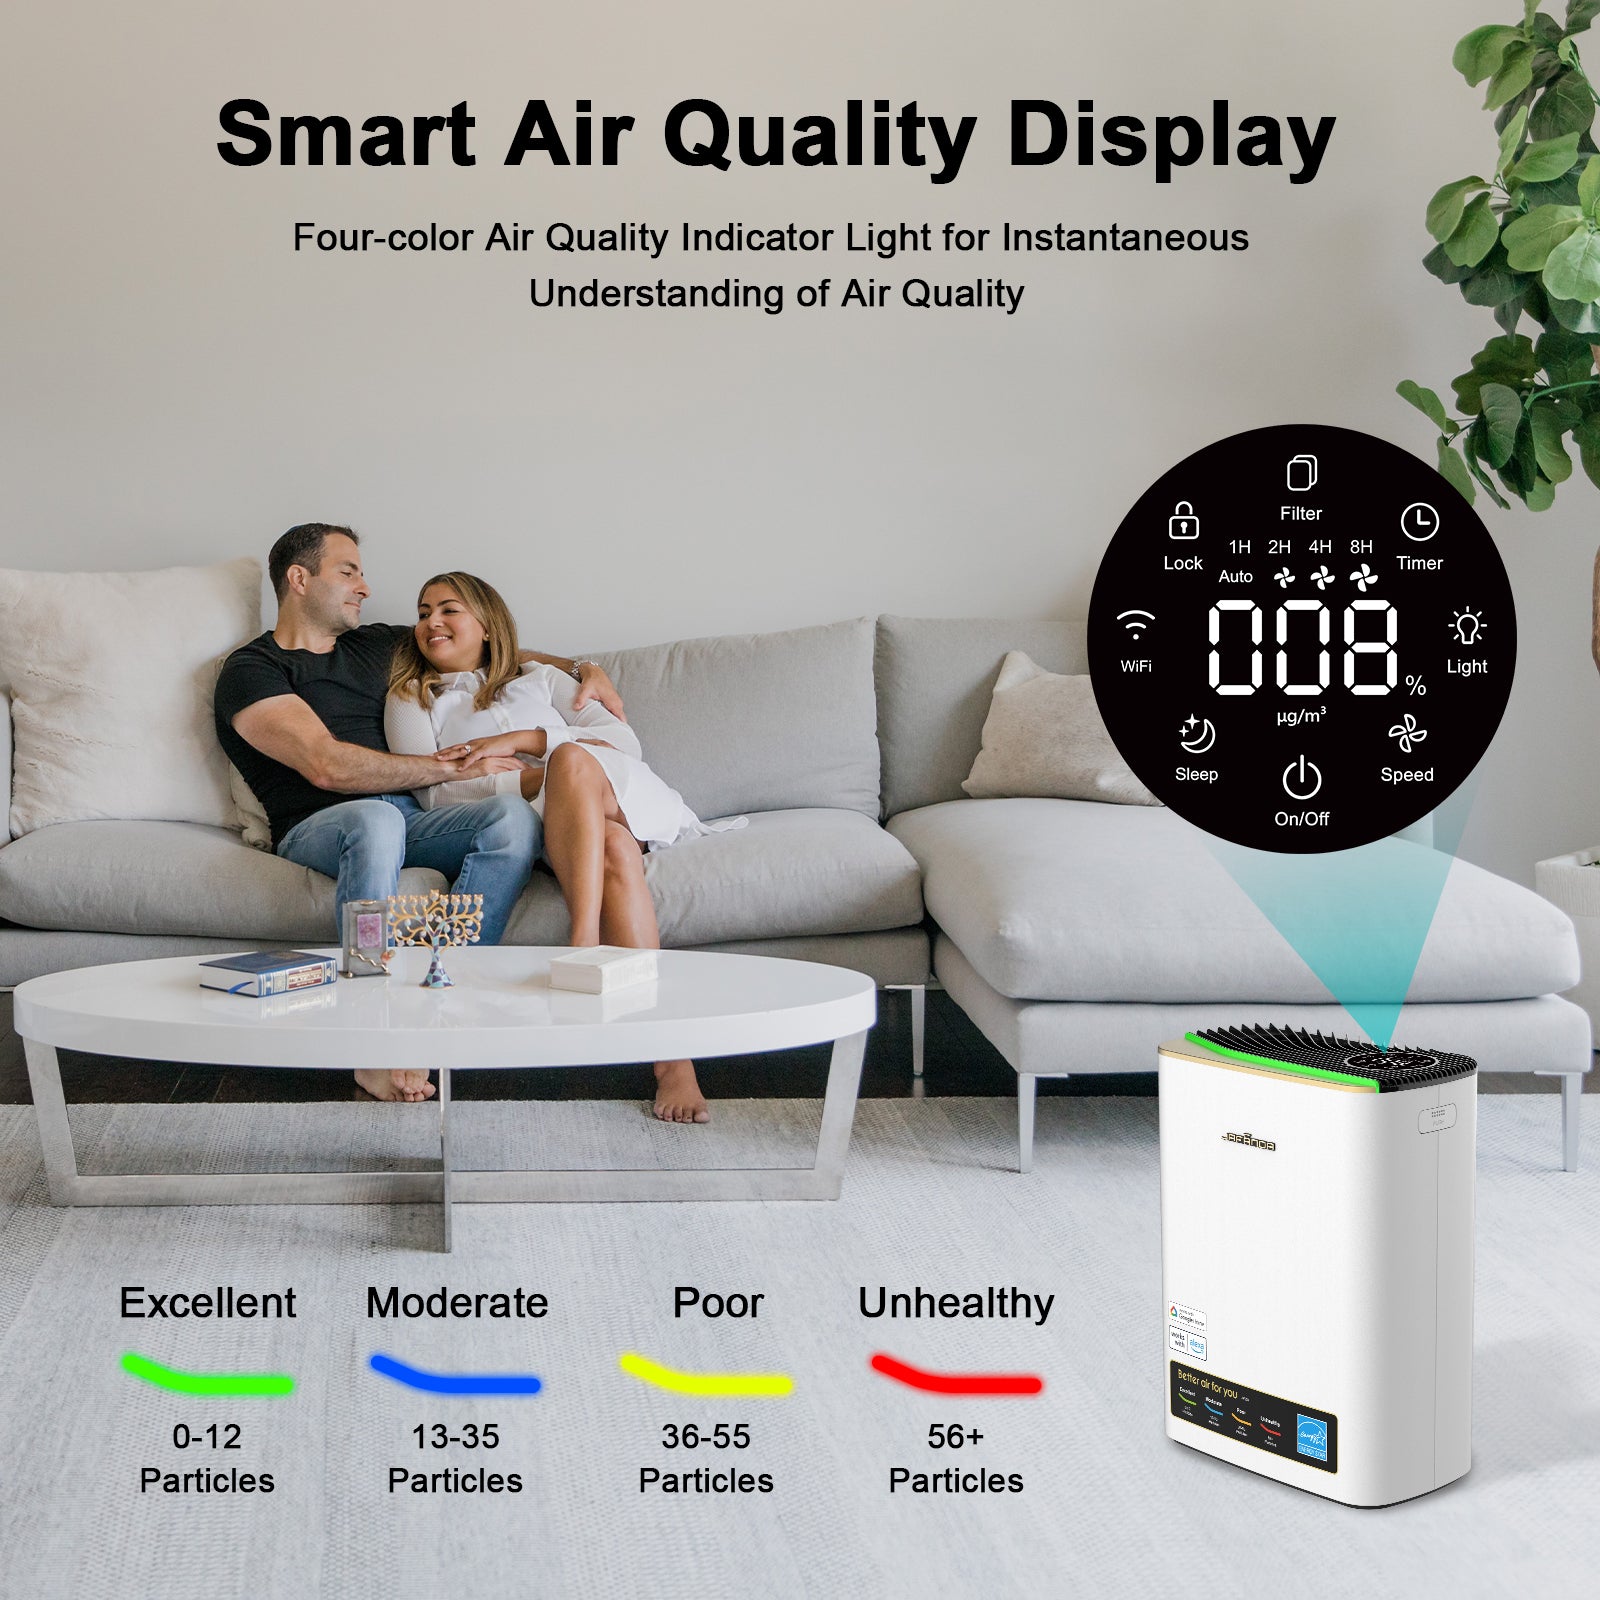 Jafanda Air Purifiers for Home Large Room Up To 1100ft², True HEPA 13 Filter, Activated Carbon Remove 99.97% Dust Smoke Odor Pollen Pets Hair Dander Allergies, Quiet Sleep Mode 20dB - Jafanda